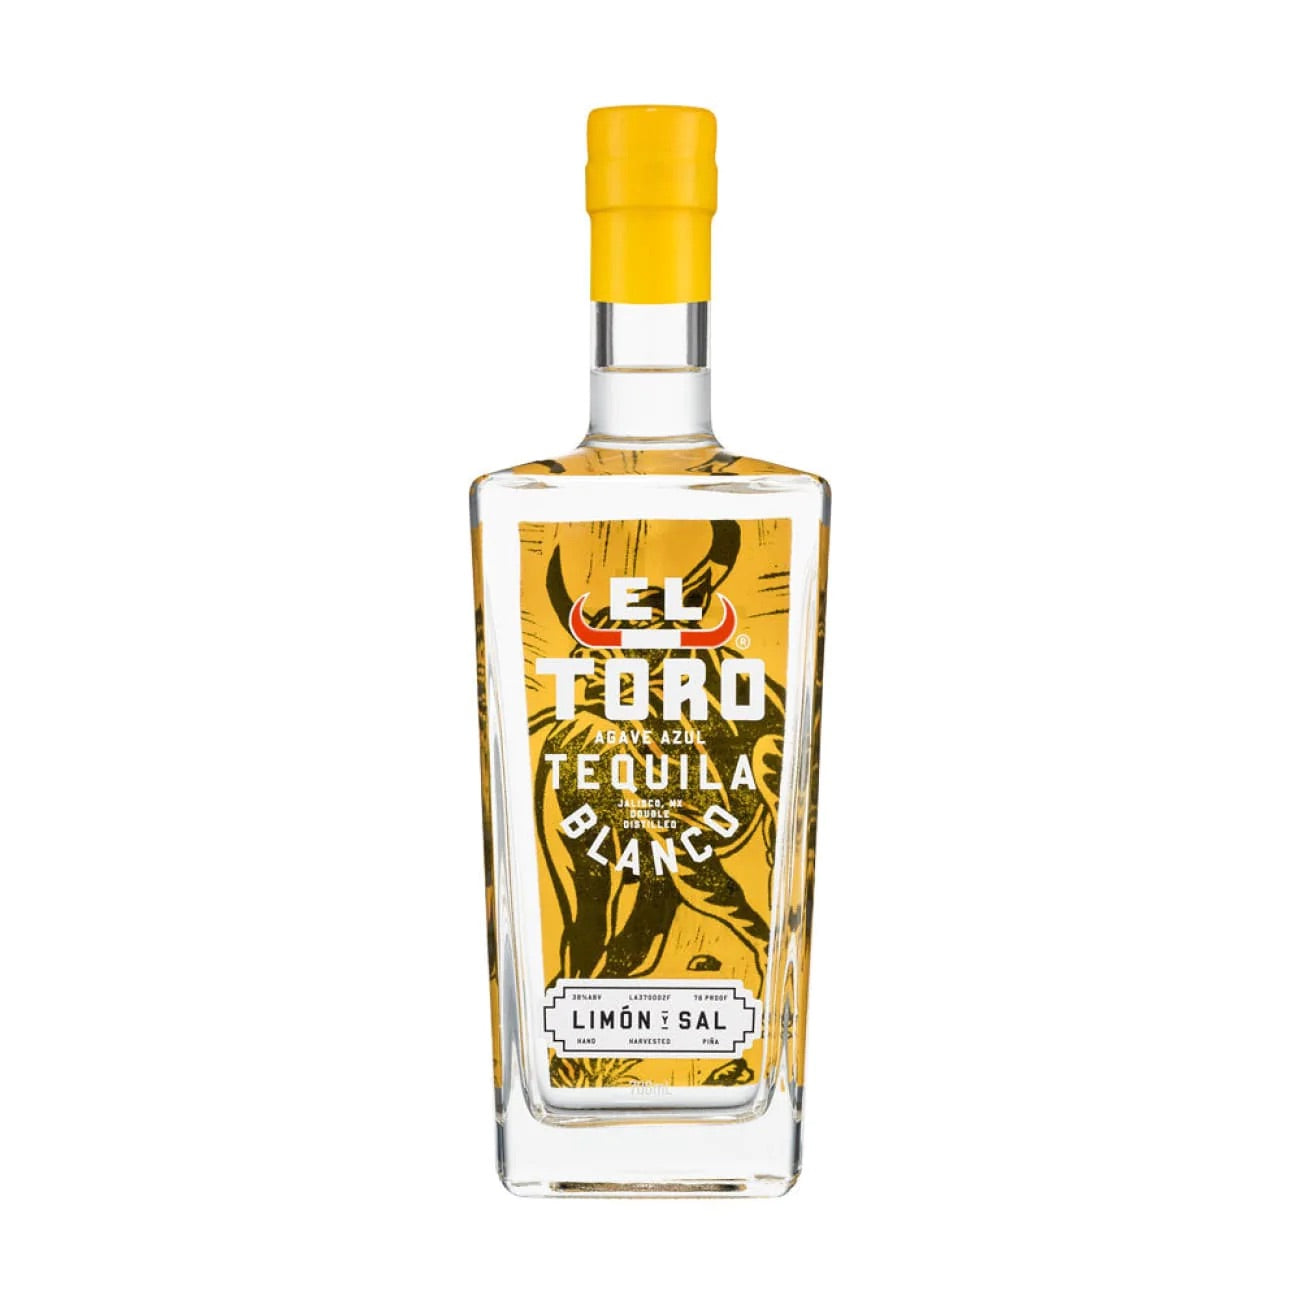 El Toro Tequila Limon Y Sal 700ml